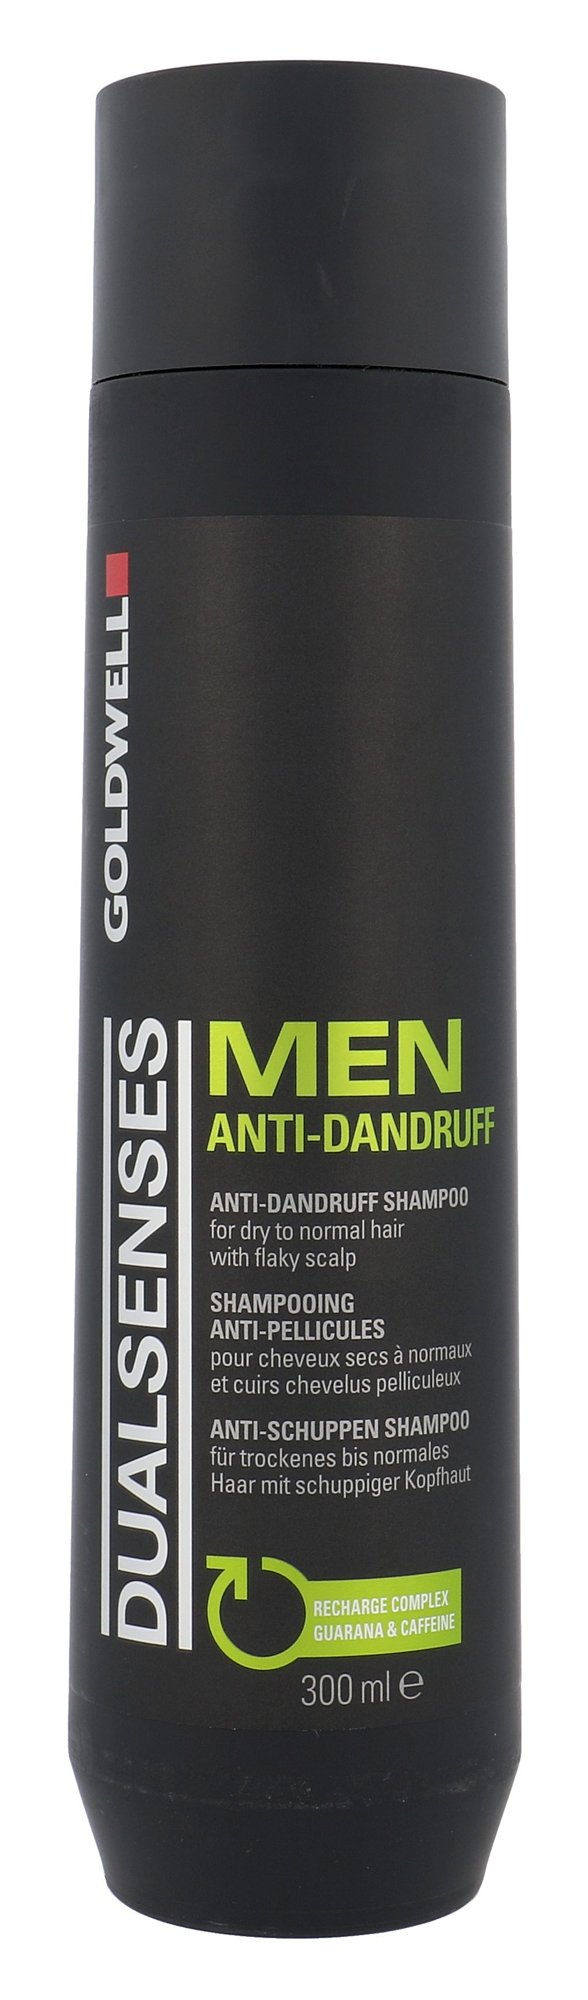 Goldwell Dualsenses For Men Anti-Dandruff 300ml šampūnas